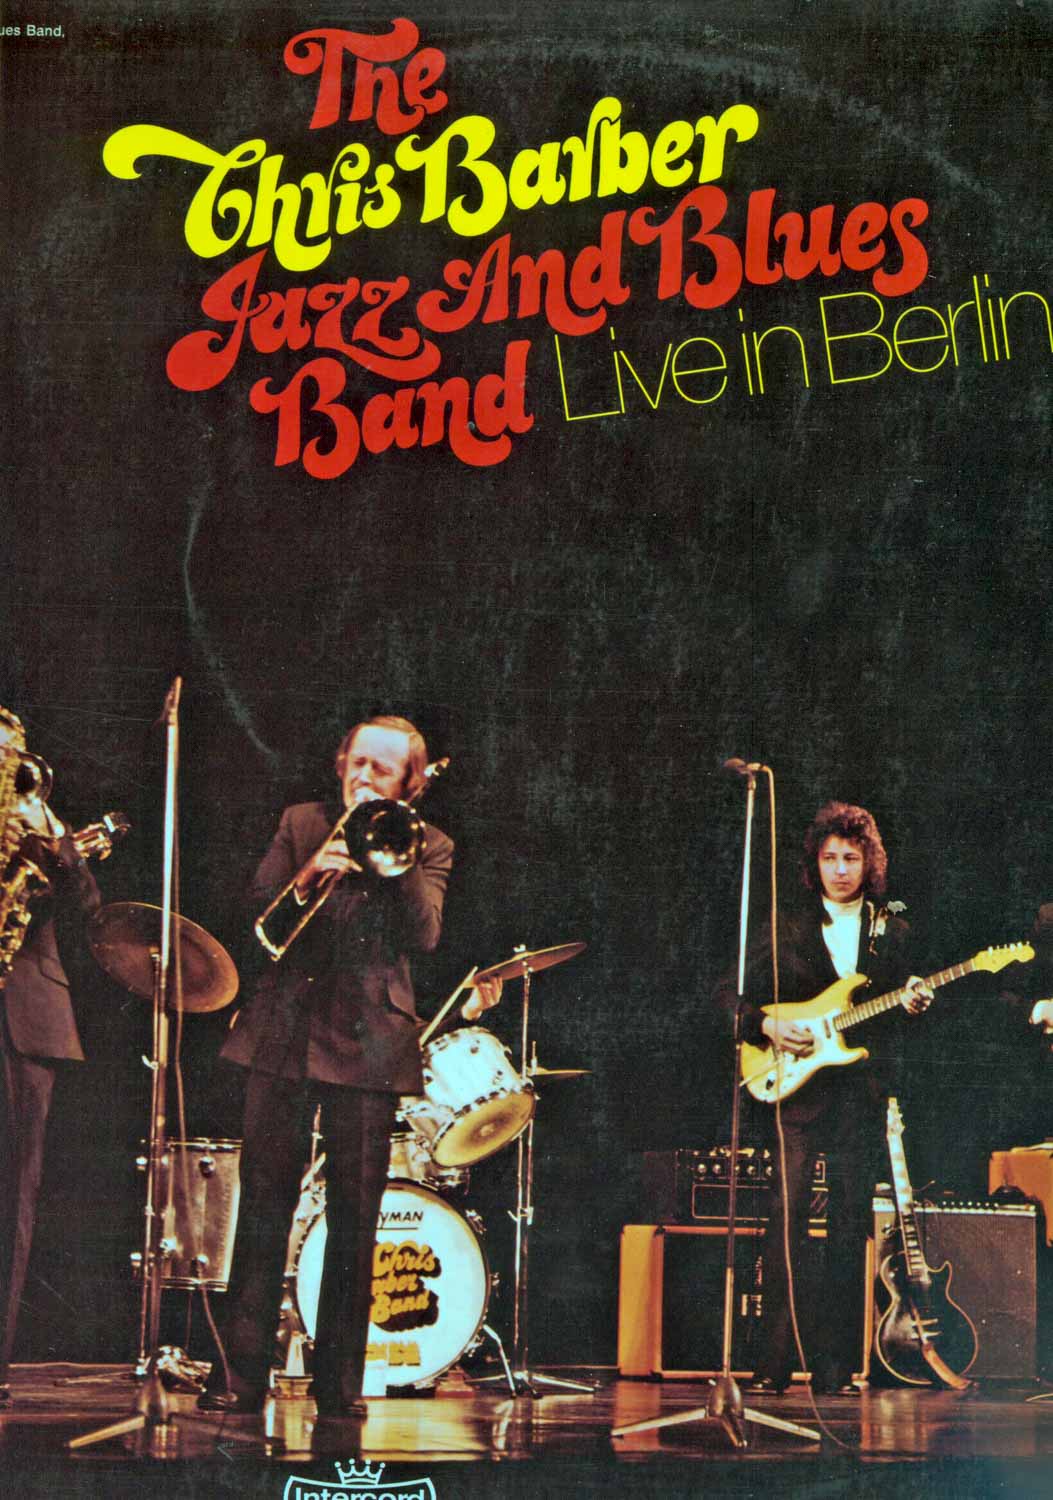 Chris Barber Jazz and Blues Band  Live in Berlin (Doppel-LP) (28 430-7 Z/1-2)  *LP 12'' (Vinyl)*. 